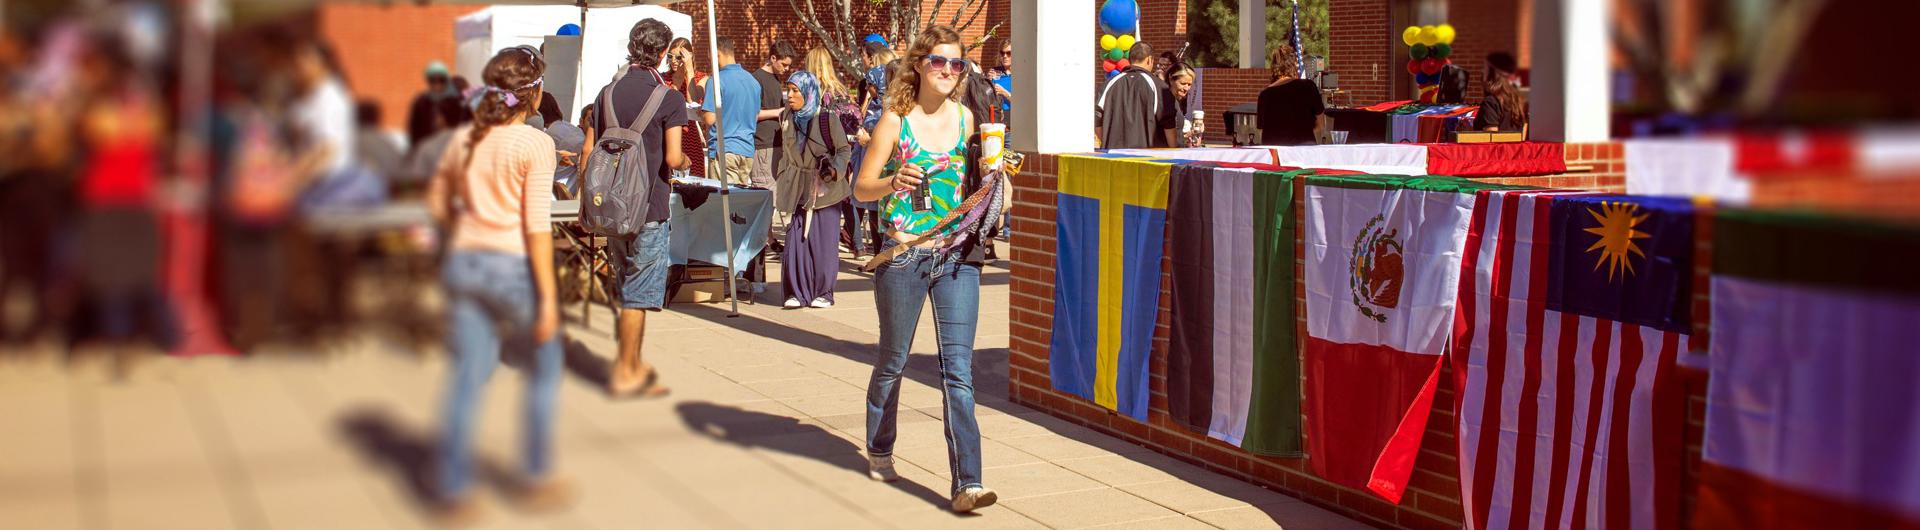 A student walks through campus during an international faire